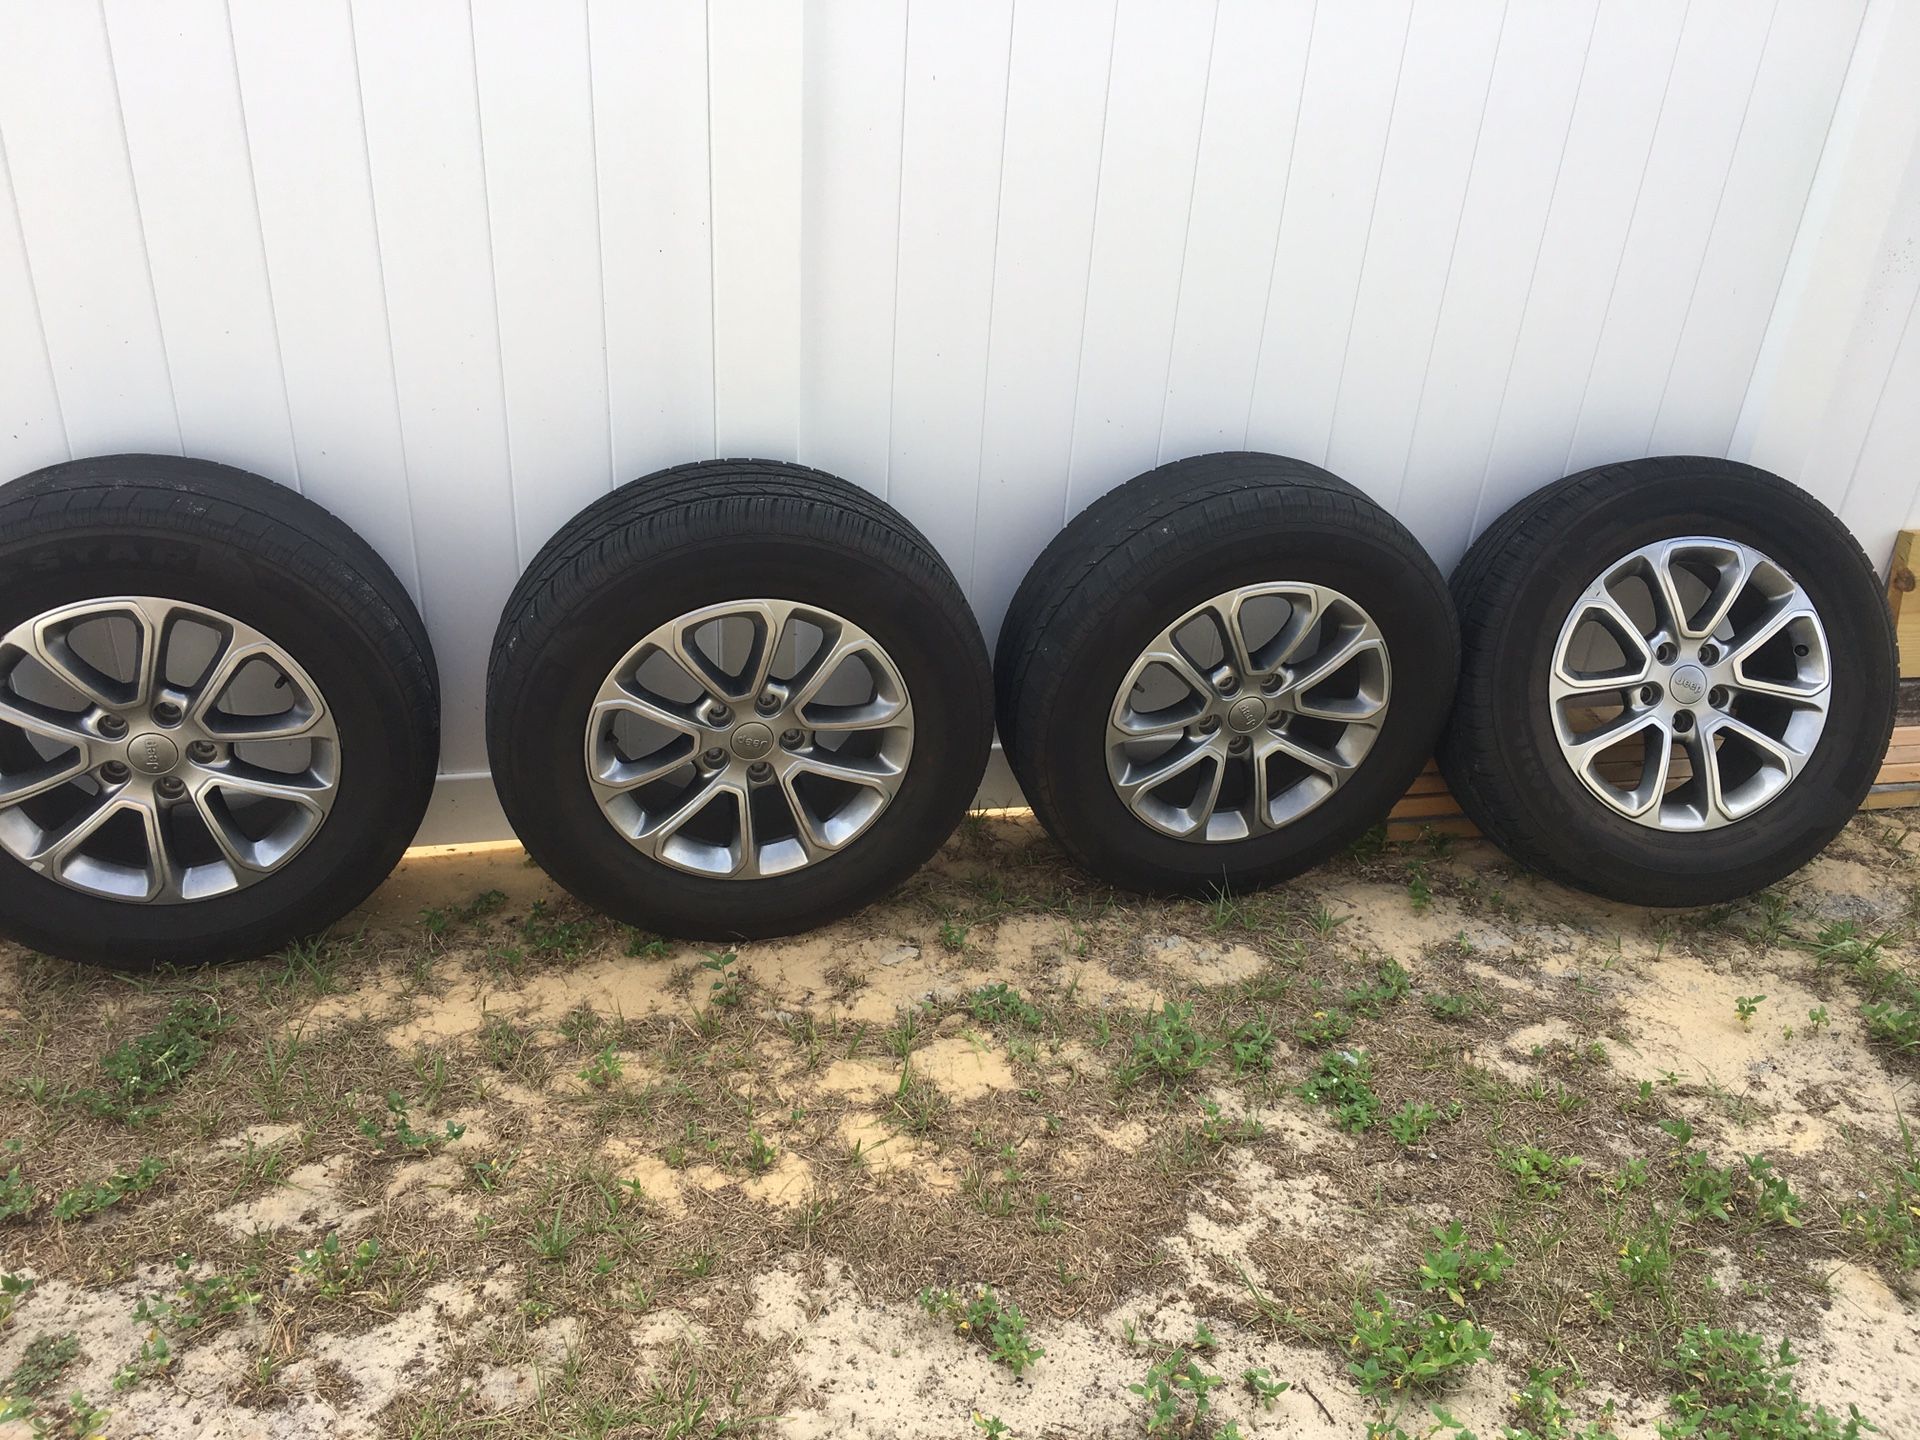 2015 Grand Cherokee wheels/ tires